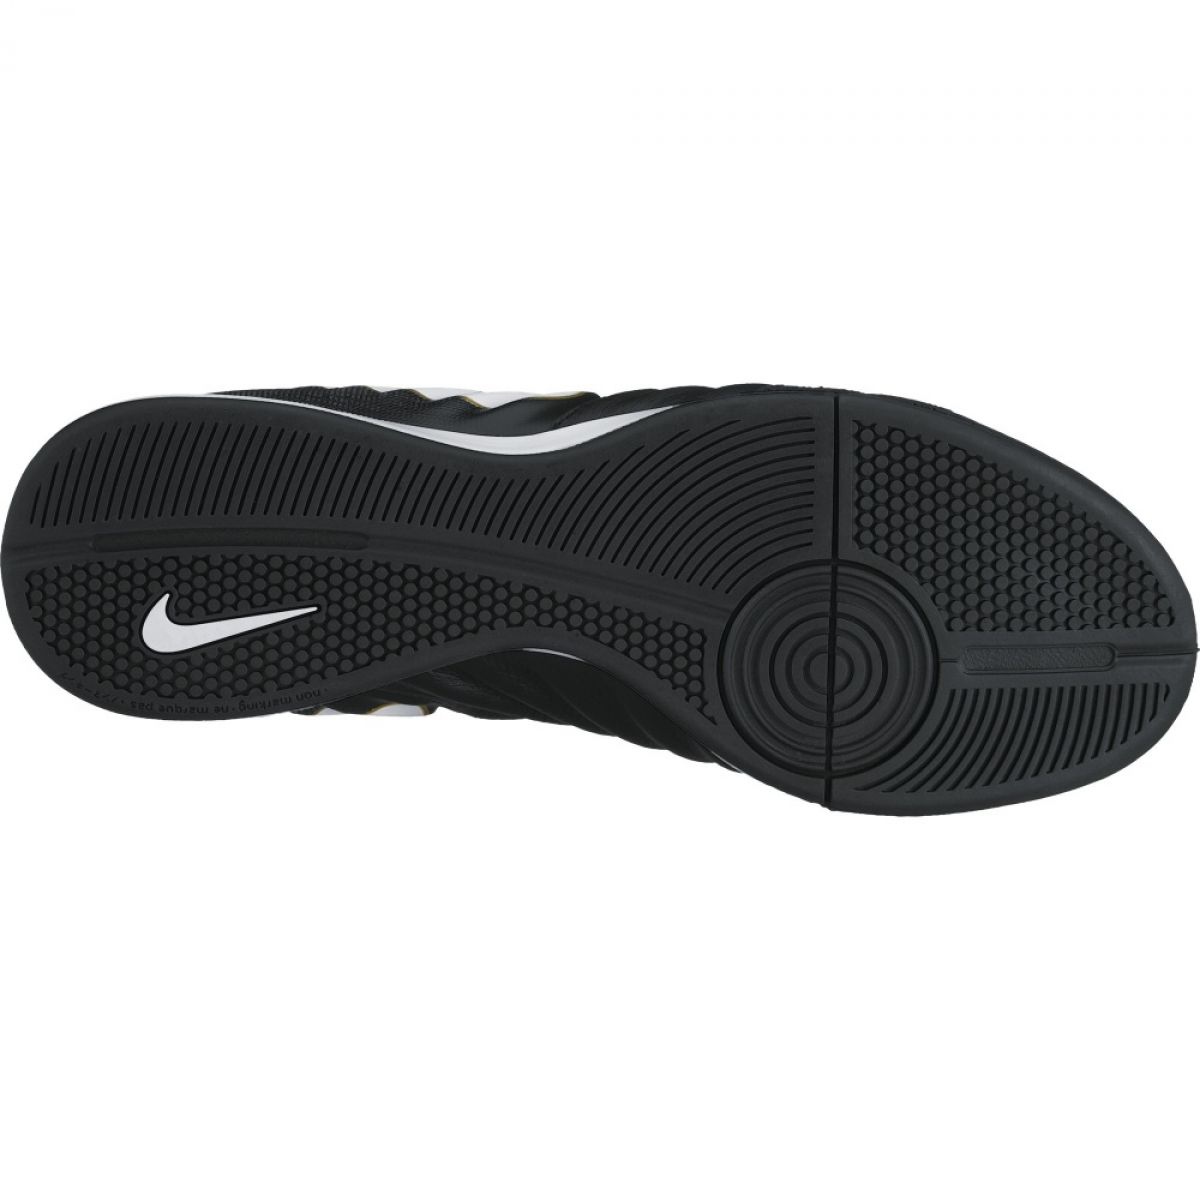 lid Graveren activering Indoor shoes Nike TiempoX Ligera Iv Ic M 897765-002 black black - KeeShoes